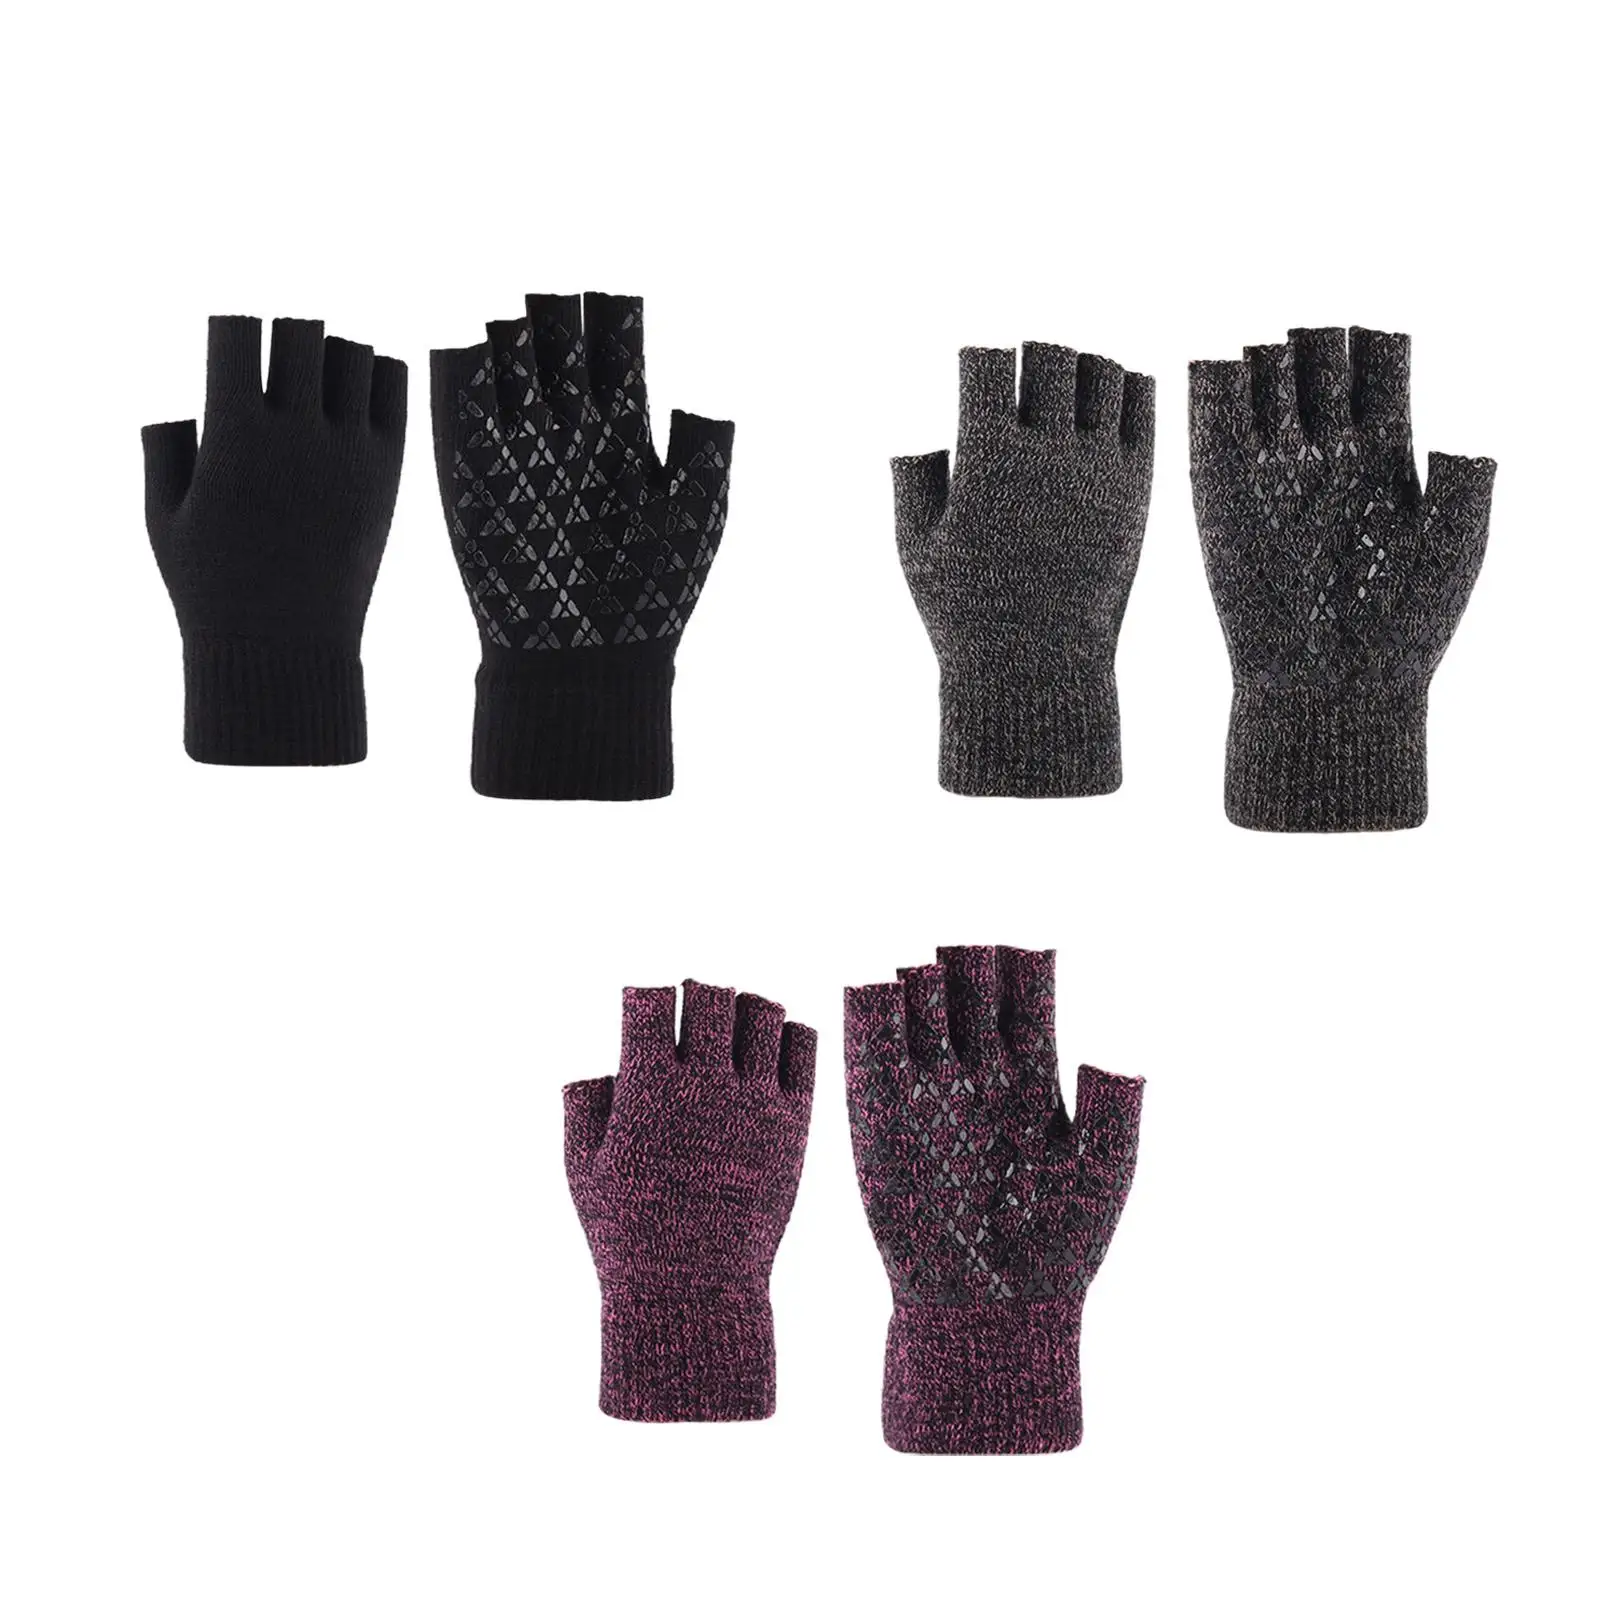 Soft Half Finger Gloves Fingerless Knit Thick Winter Mittens Outdoor Sports